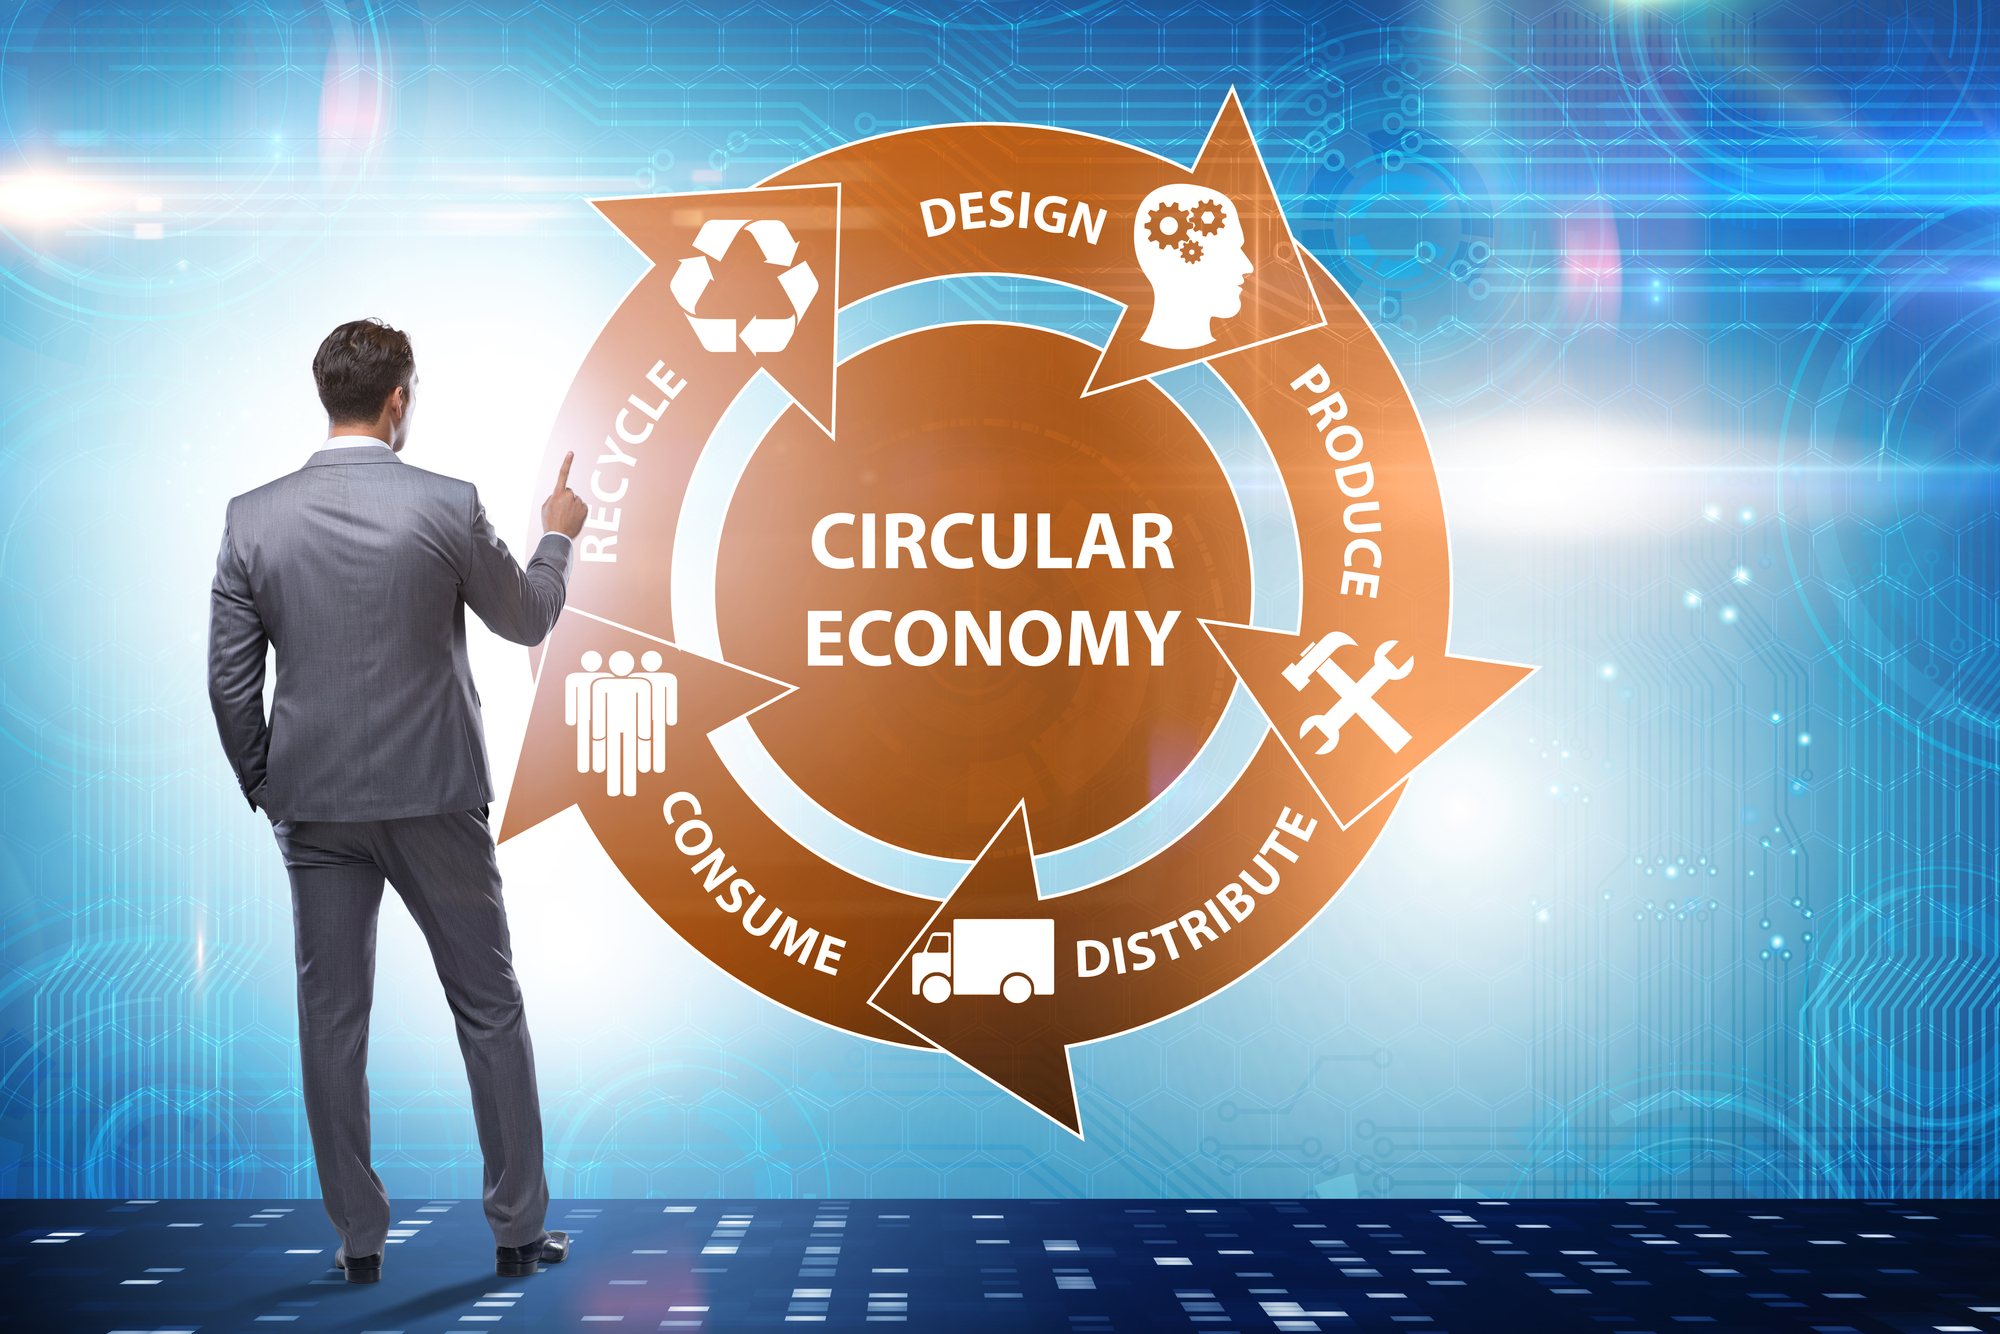 What's the Circular Economy?